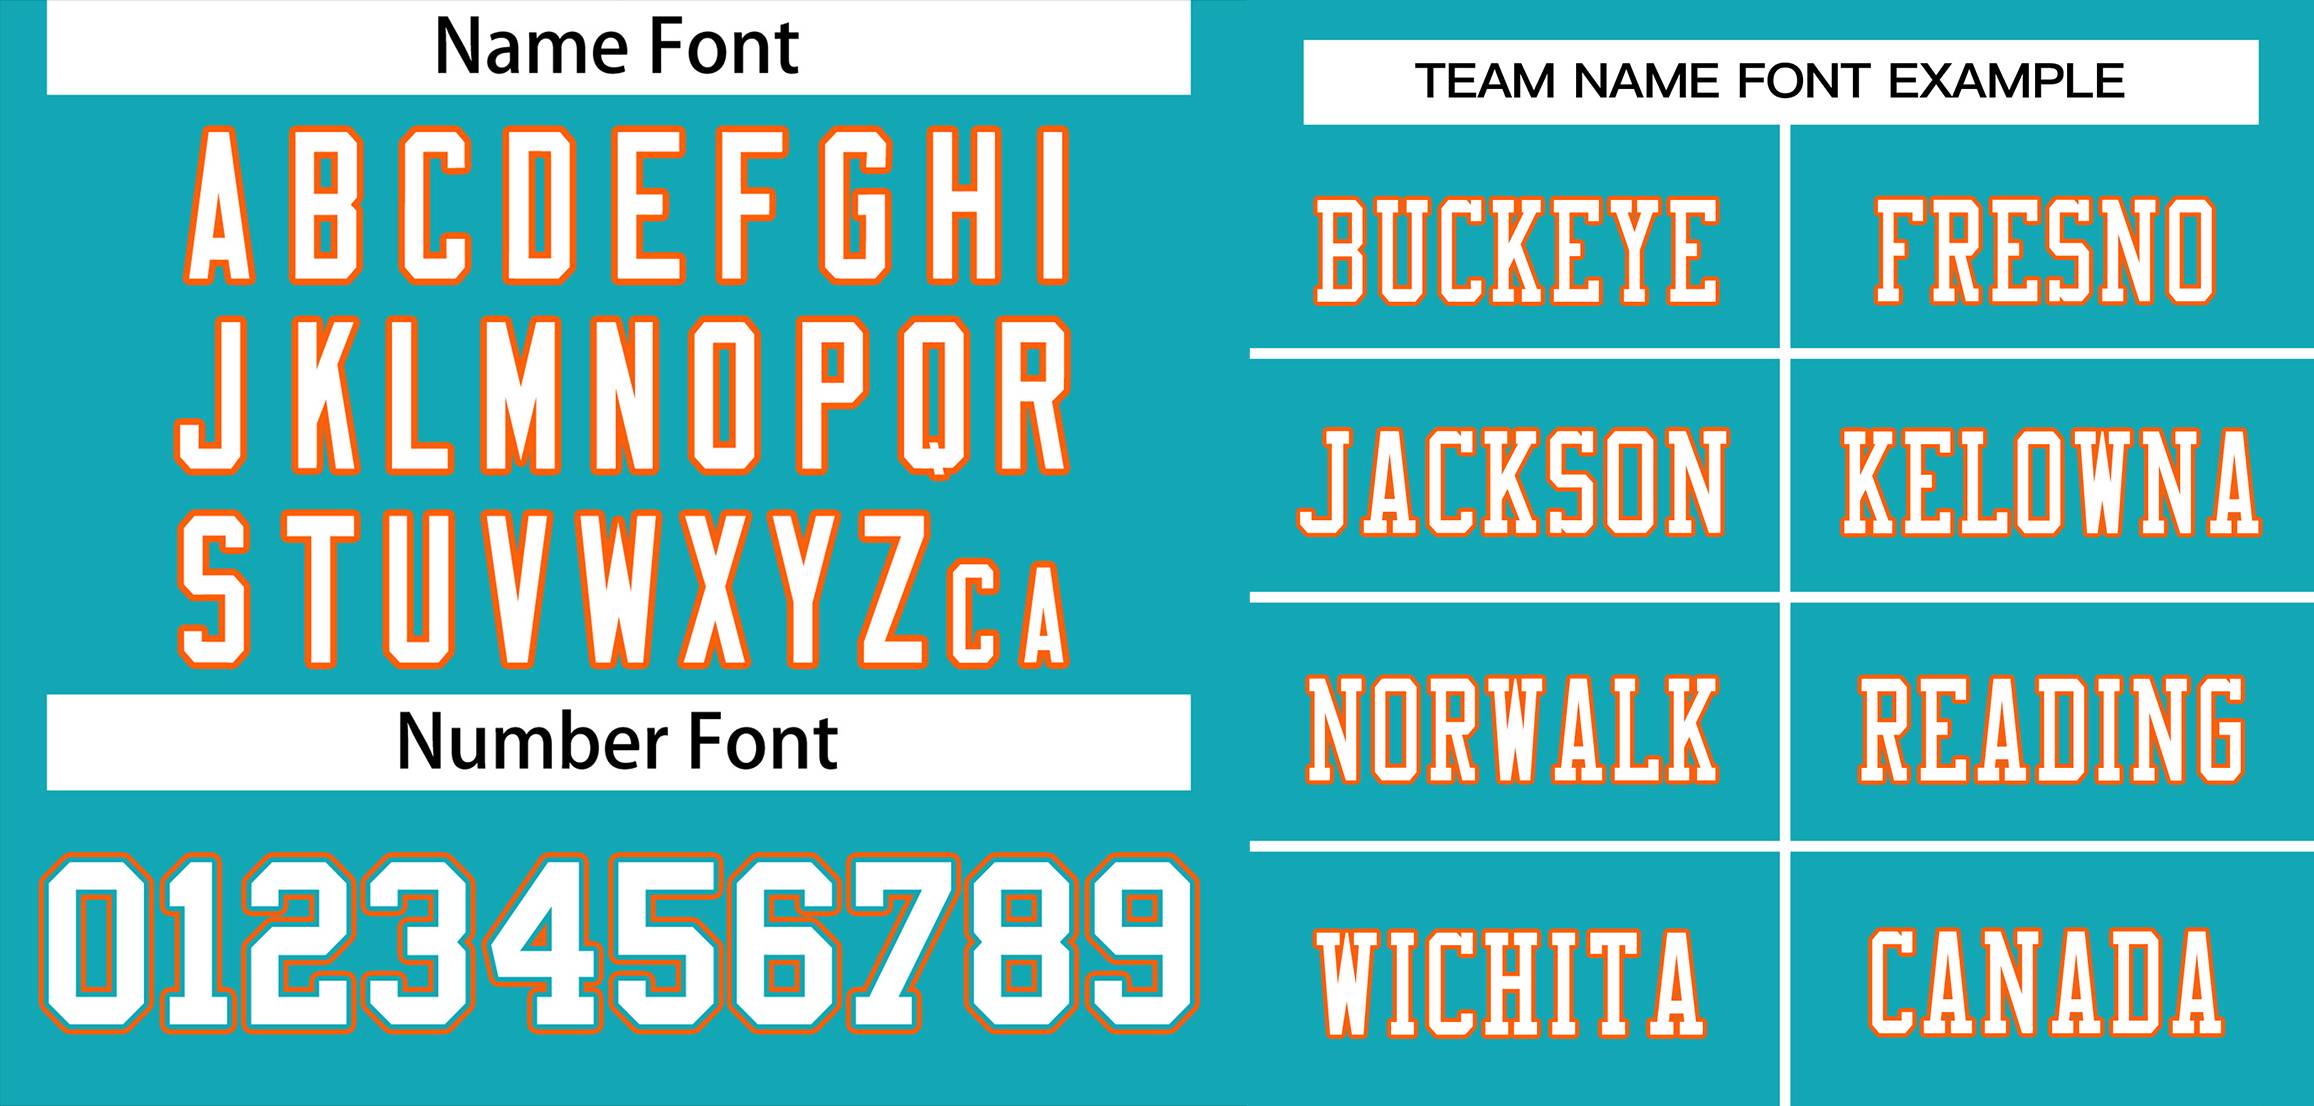 custom aqua football jerseys team name font example